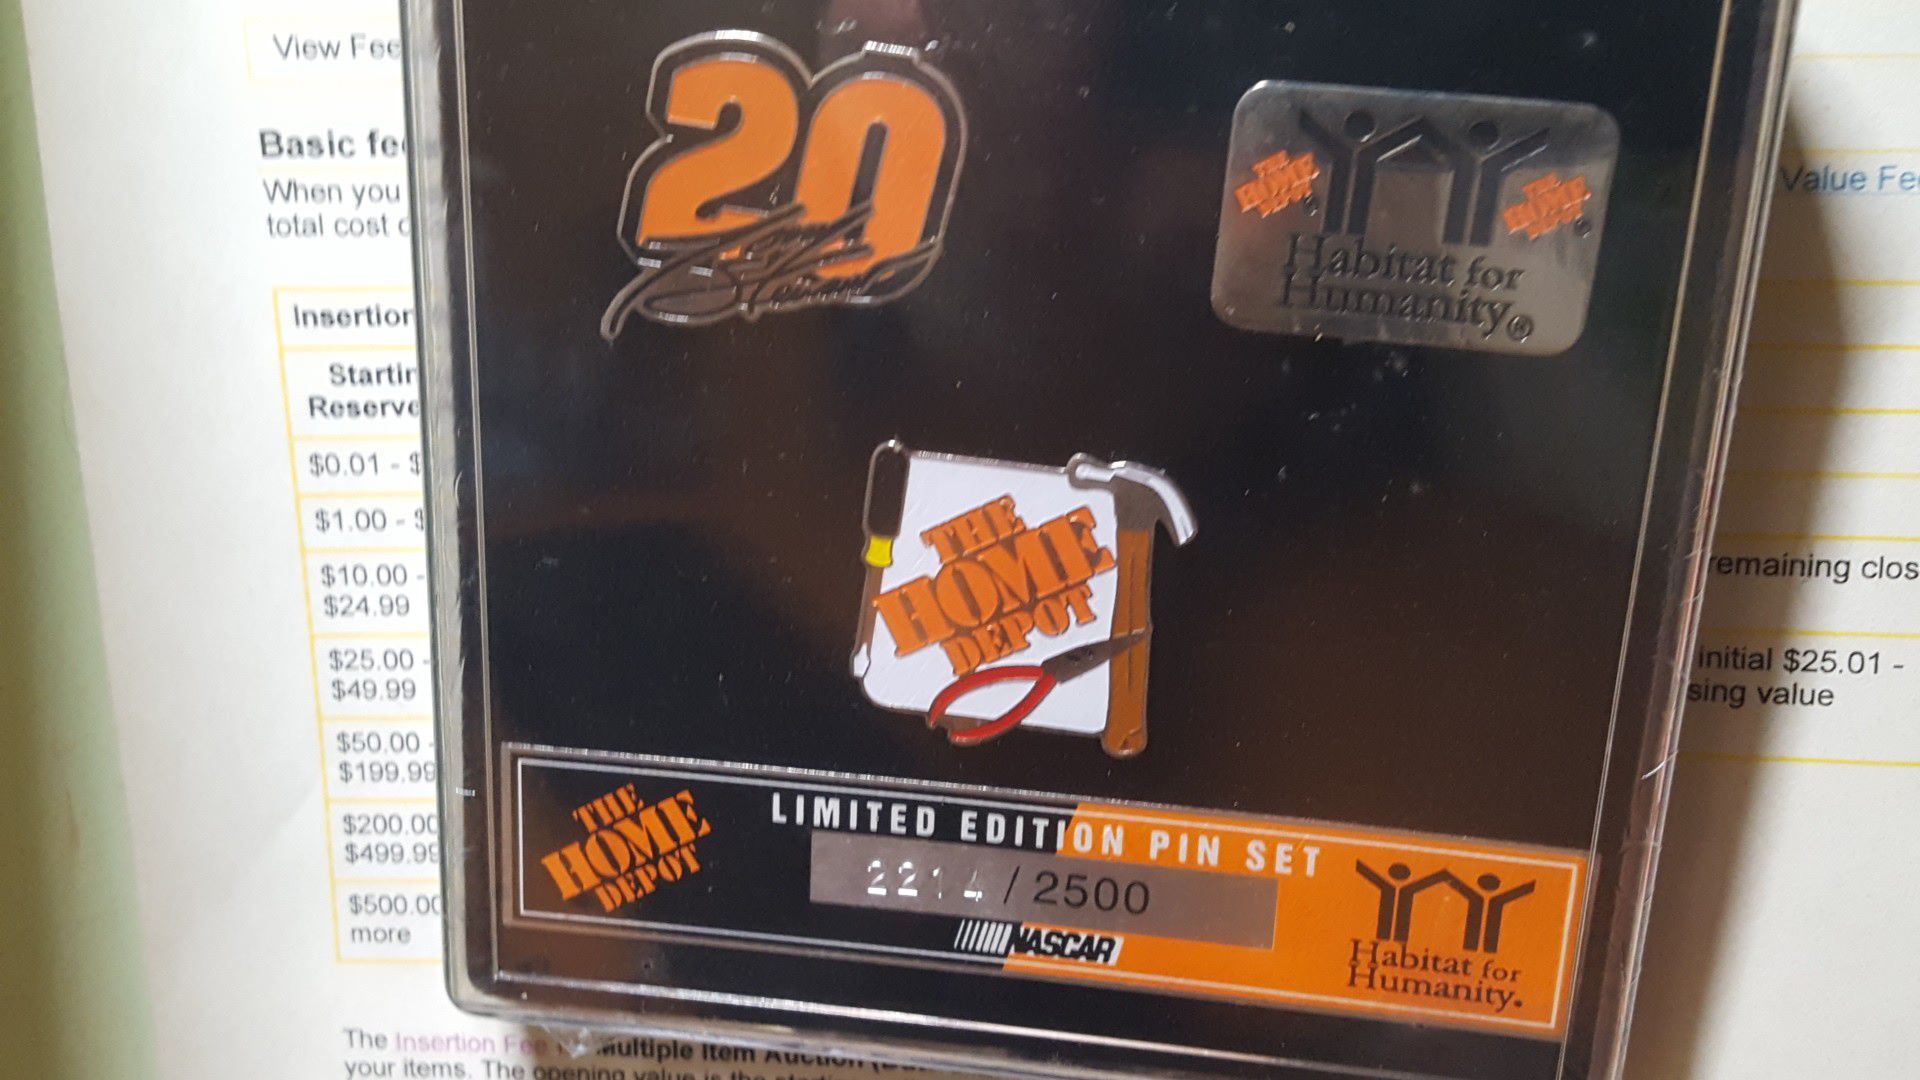 Tony Stewart NASCAR Home Depot limited edition pin set